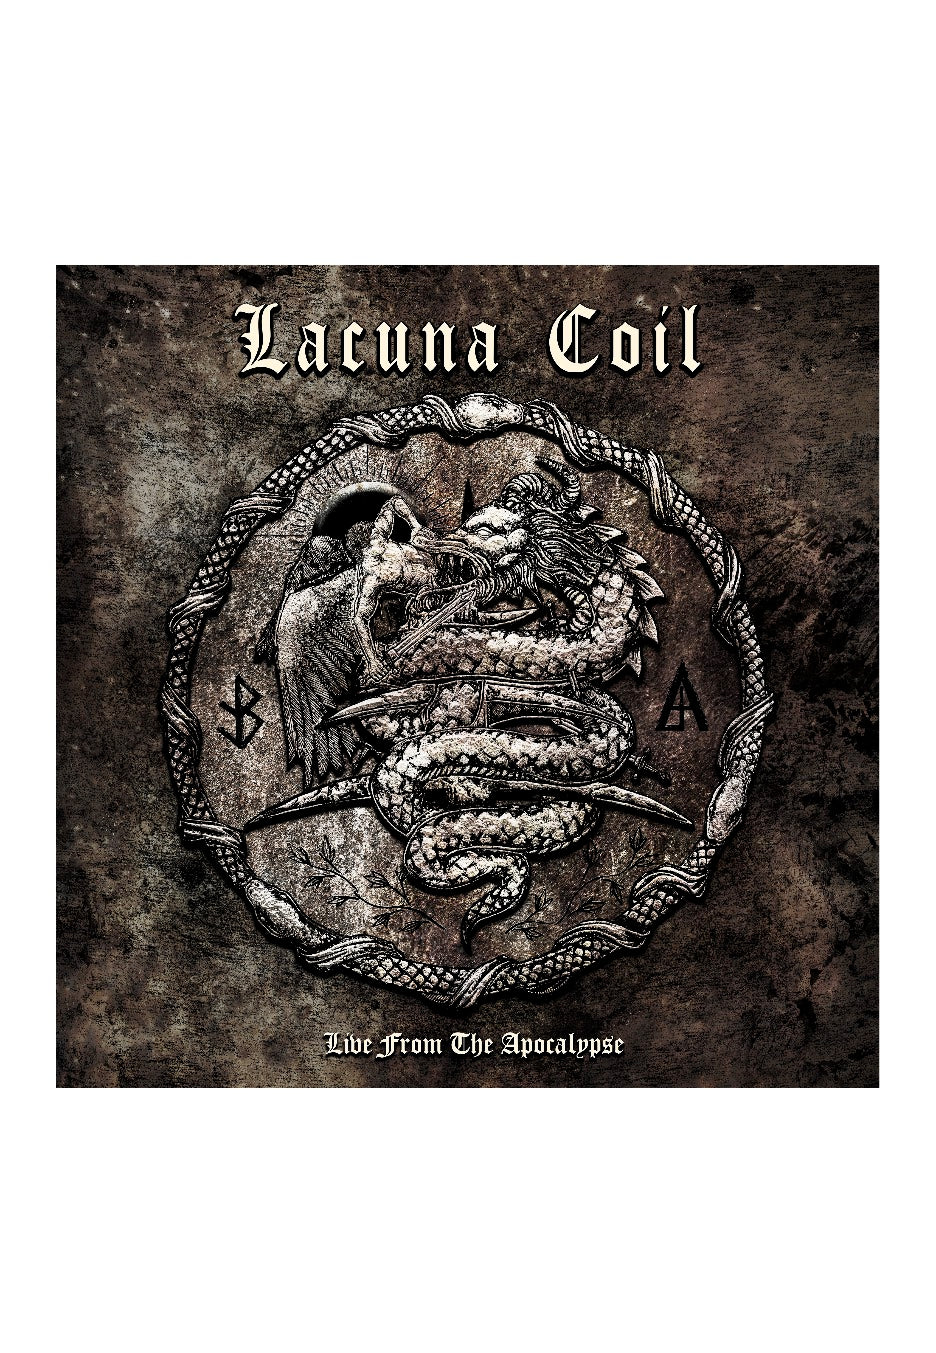 Lacuna Coil - Live From The Apocalypse Ltd. - Digipak CD + DVD